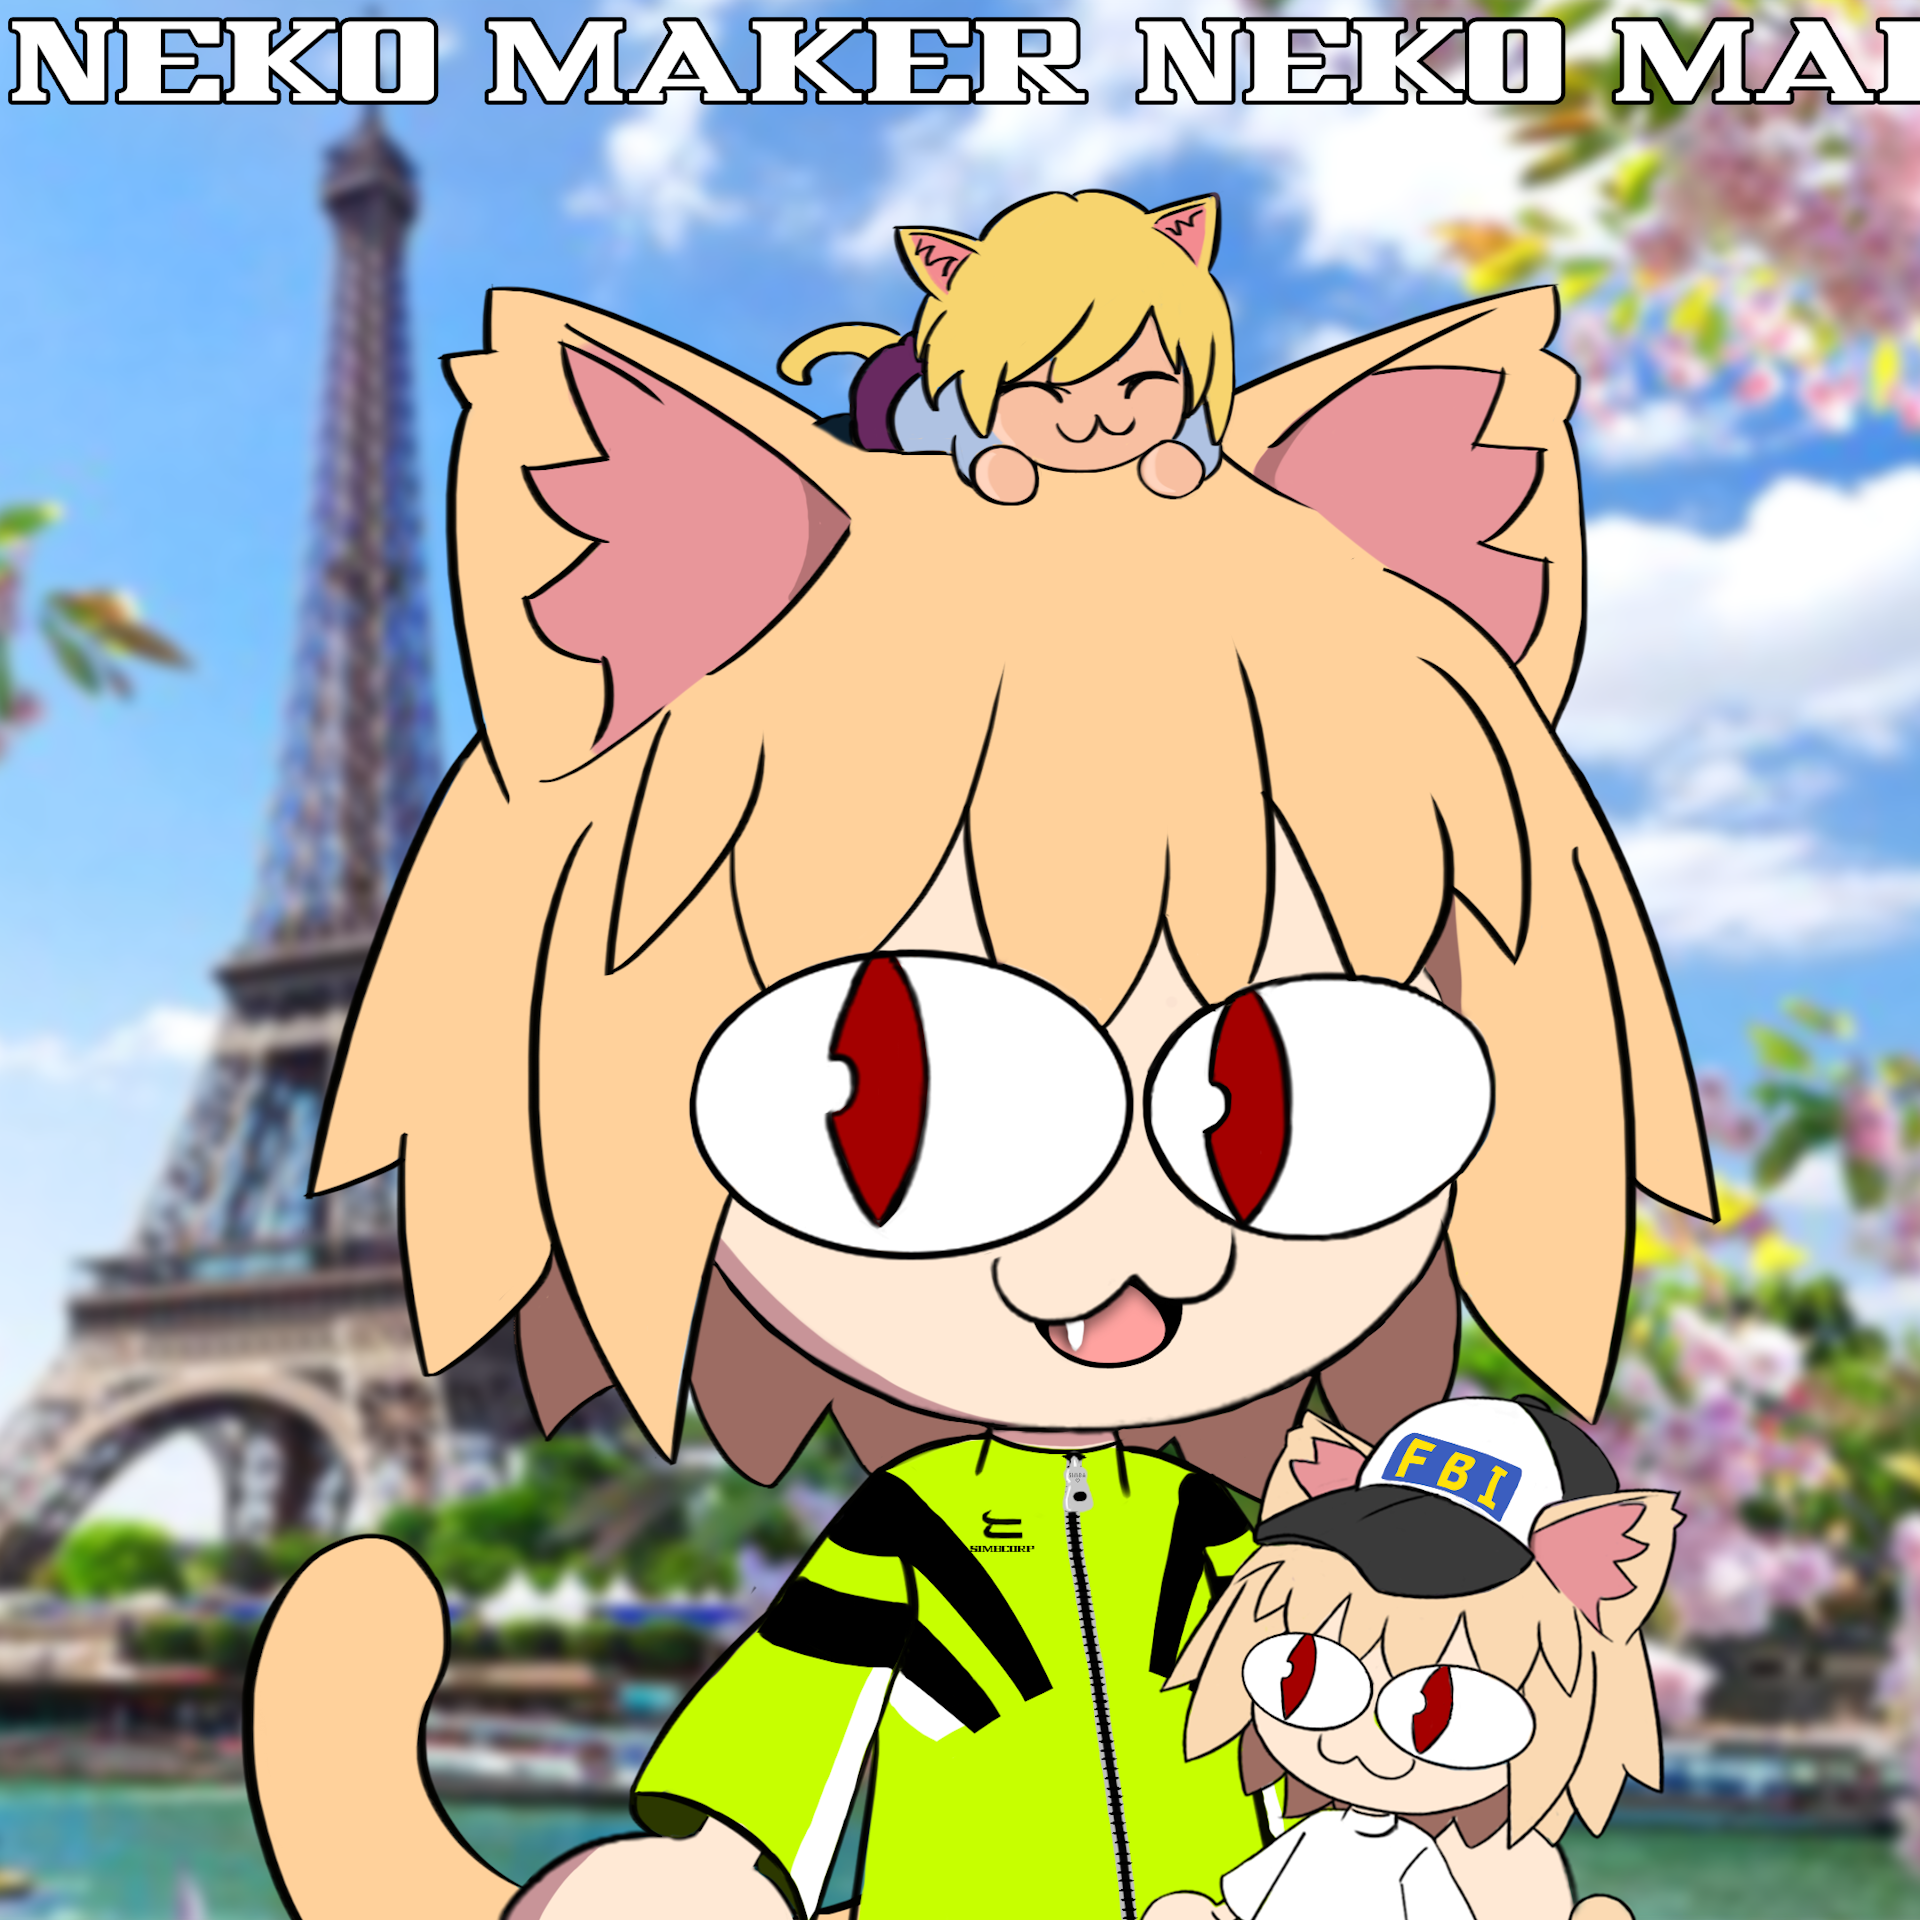 Neko Maker artwork